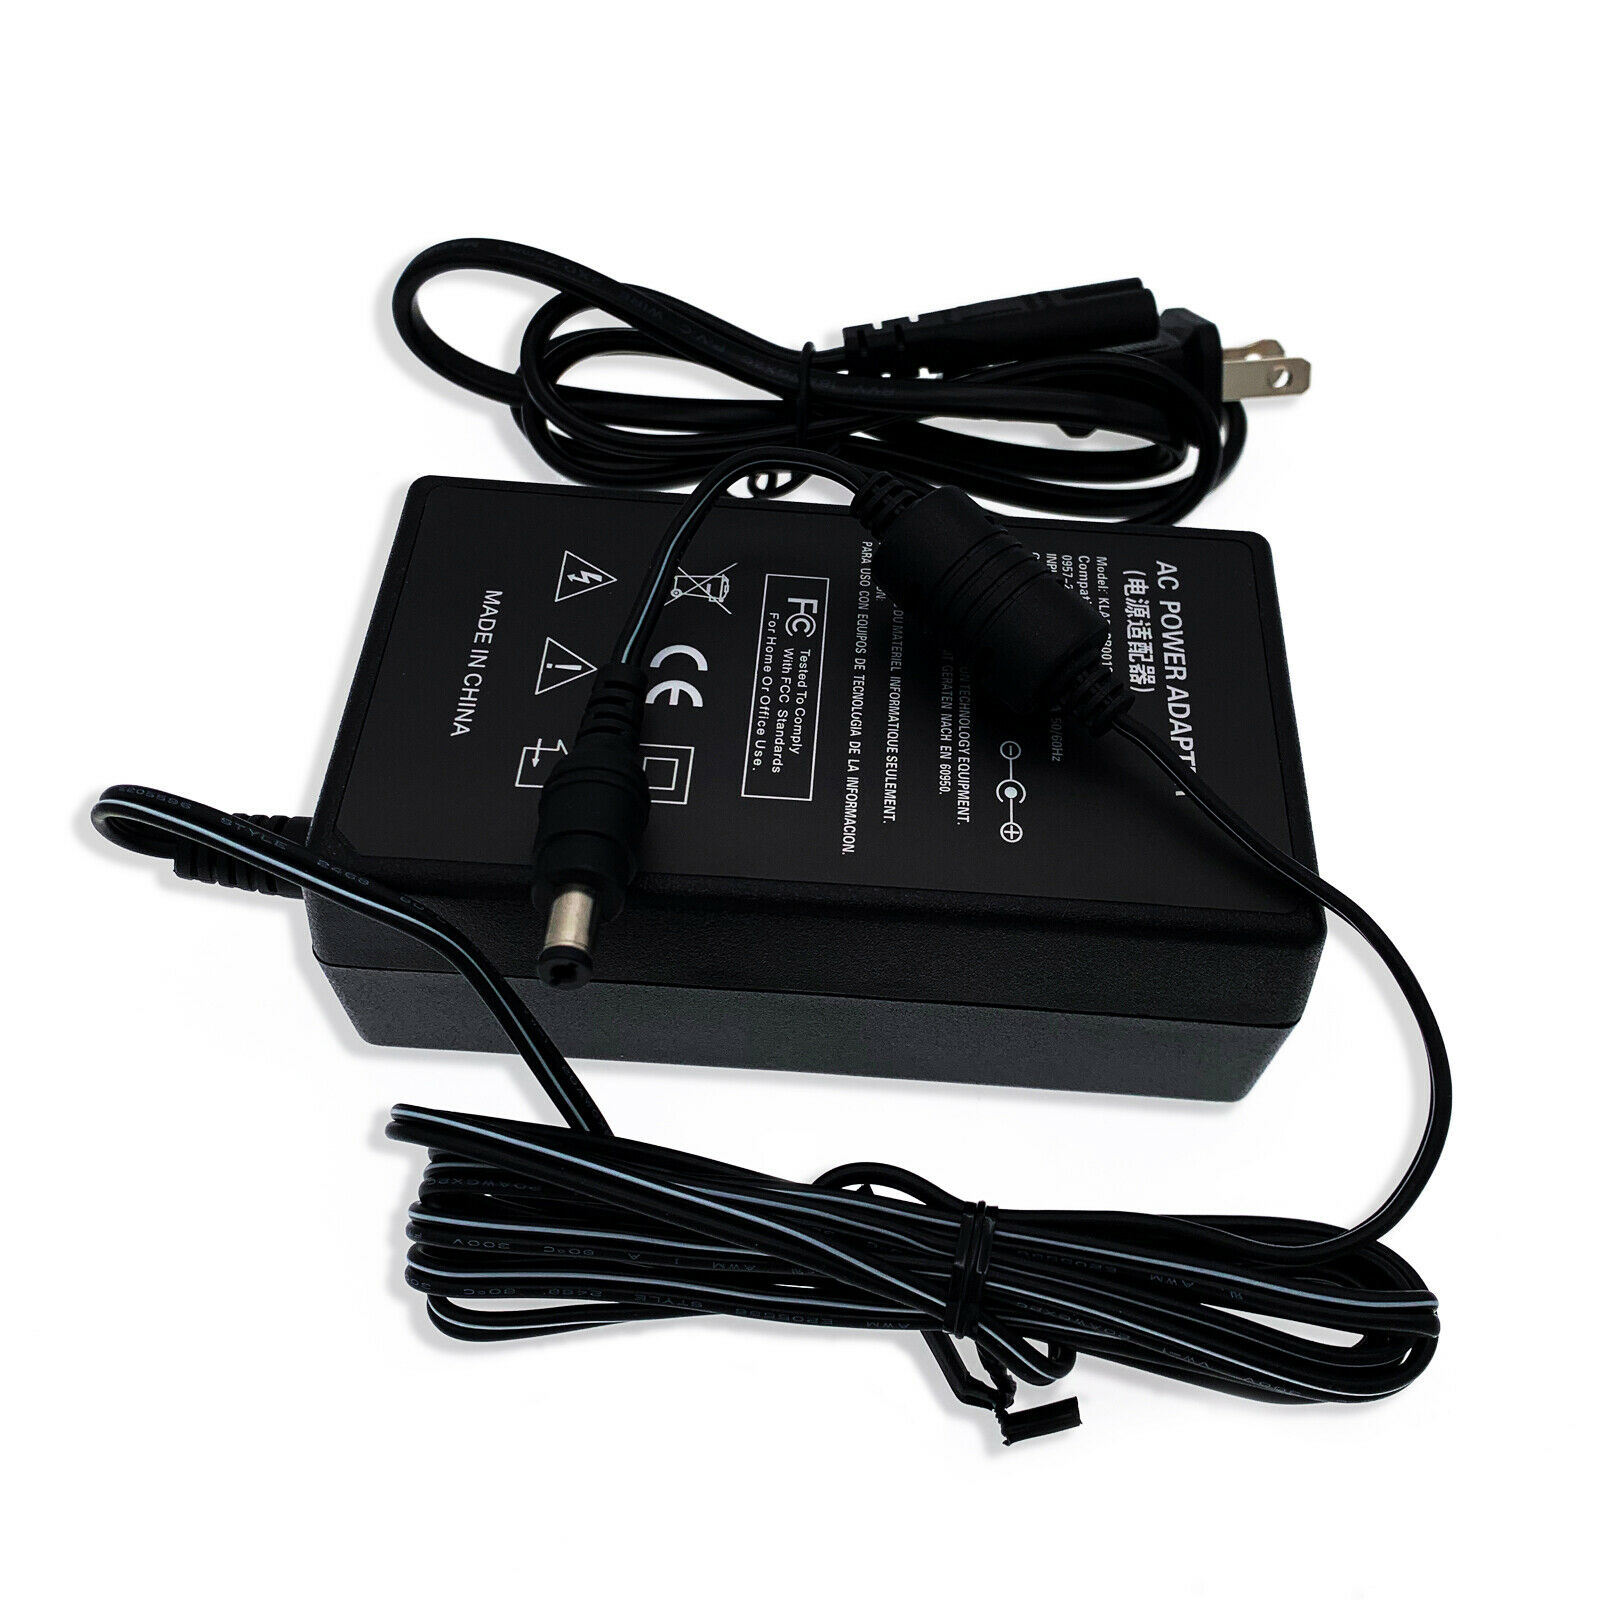 AC Adapter For HP Photosmart A612 A616 A617 A618 A626 A636 Printer Power Supply A